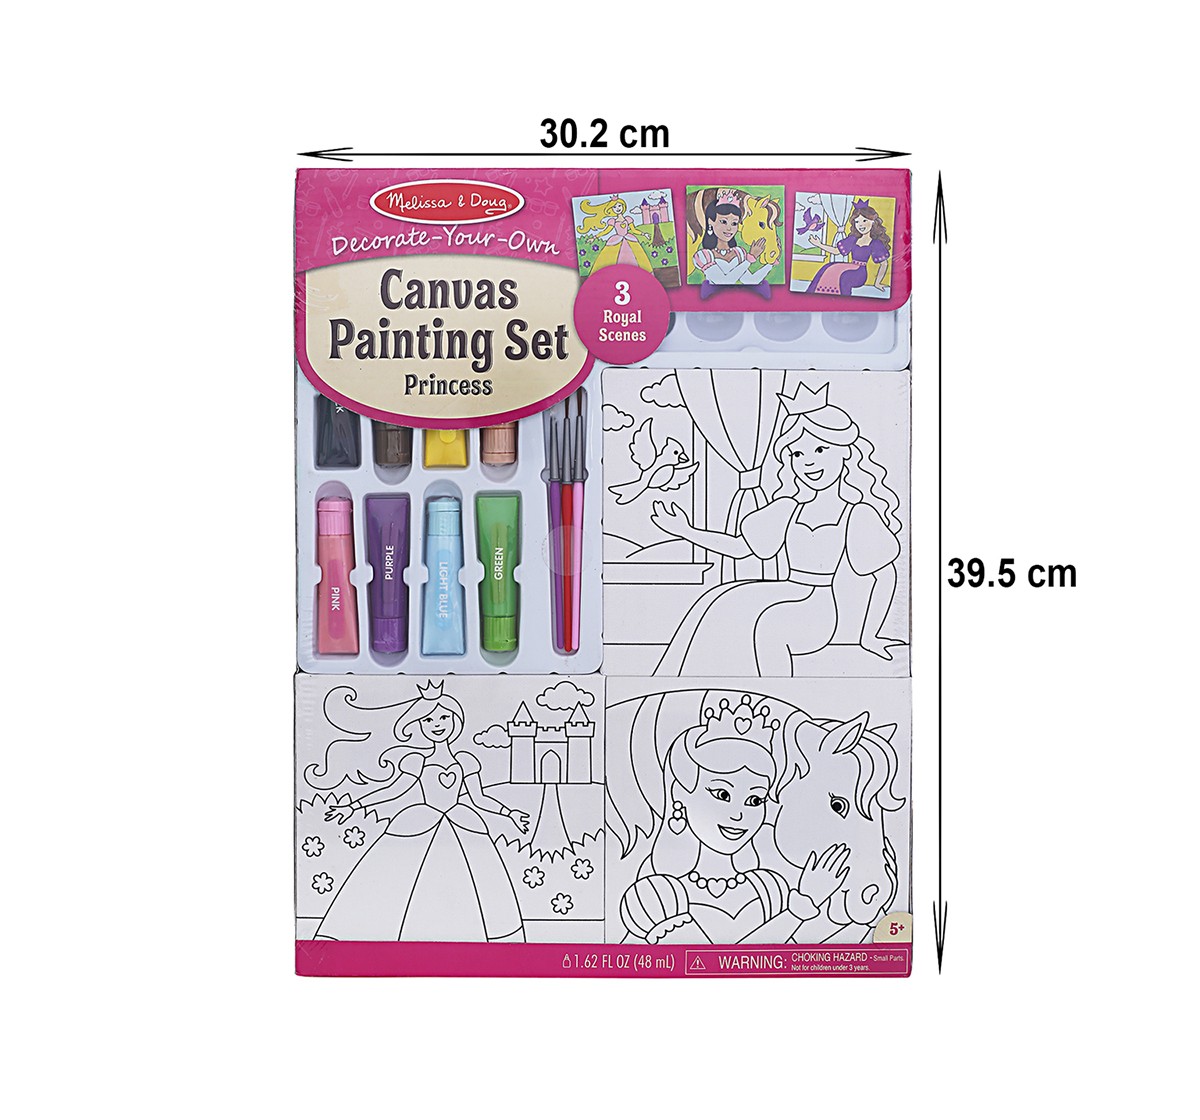 Melissa & Doug Canvas Painting Set - Princess, Multi Color DIY Art & Craft Kits for Kids age 5Y+ 